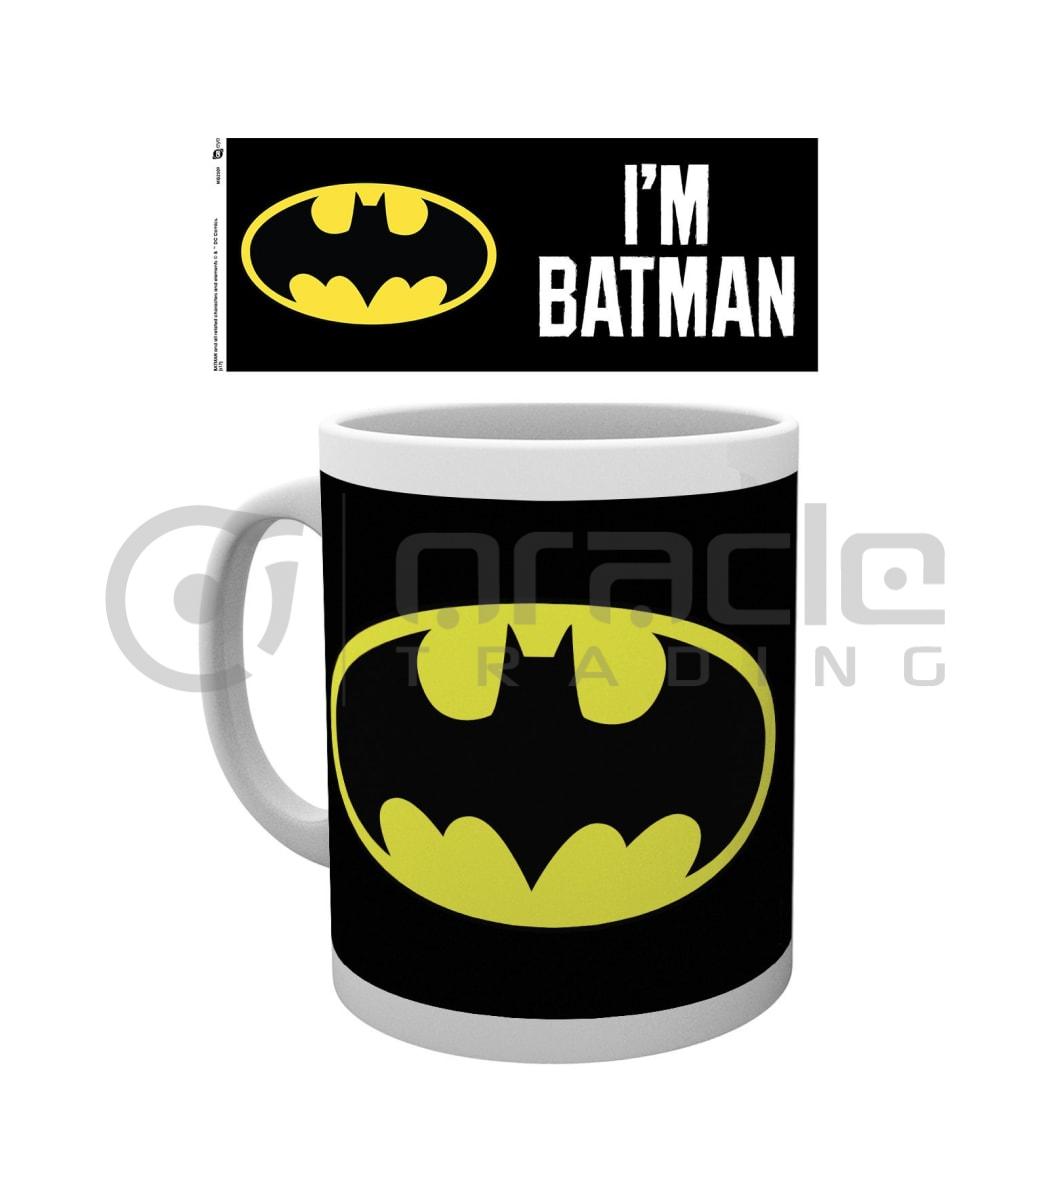 Batman Mug - I'm Batman